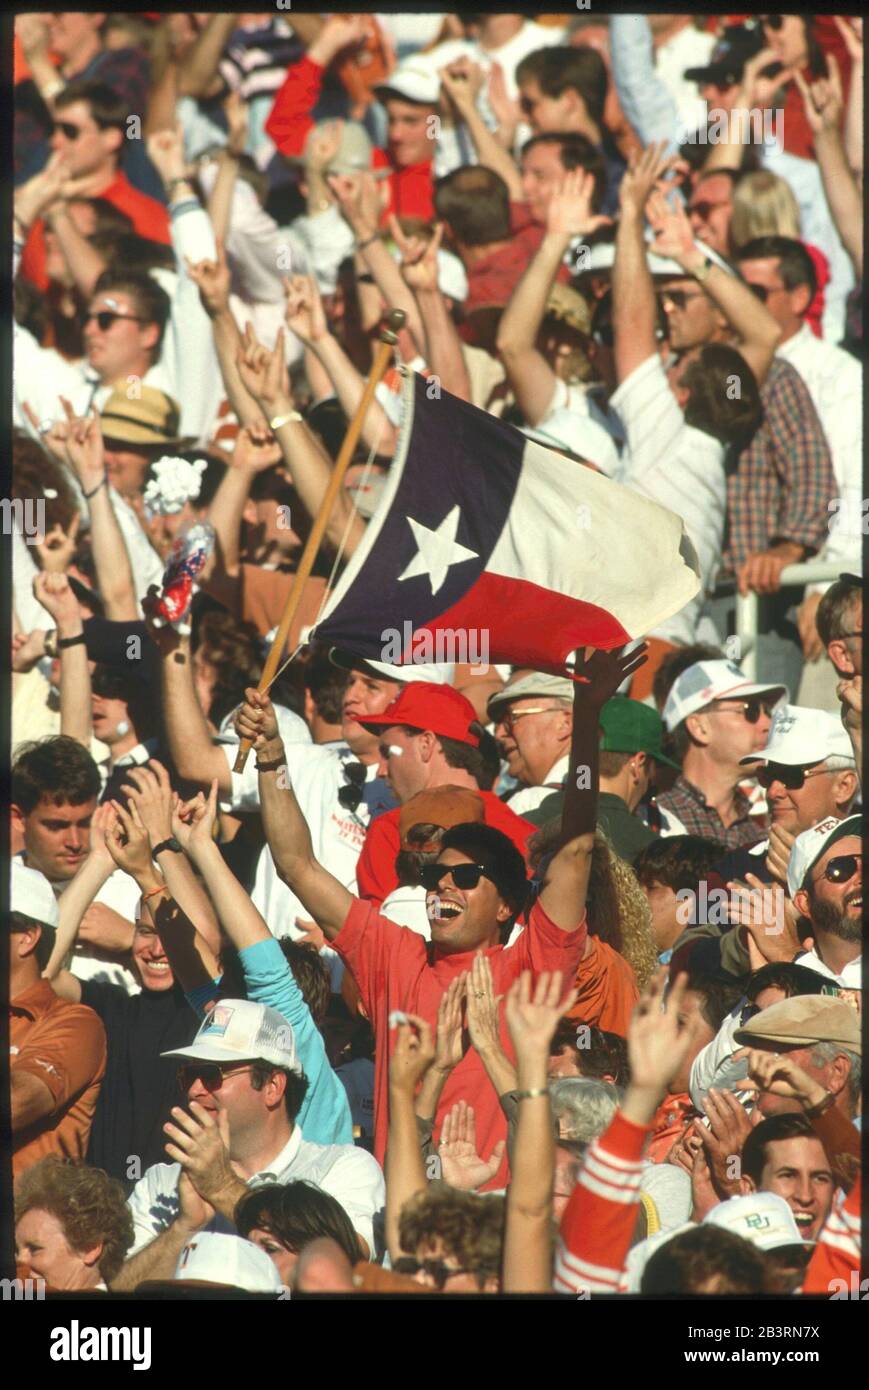 Waco Texas USA, circa 1993: Crowd of people cheering at college football game. Stock Photo